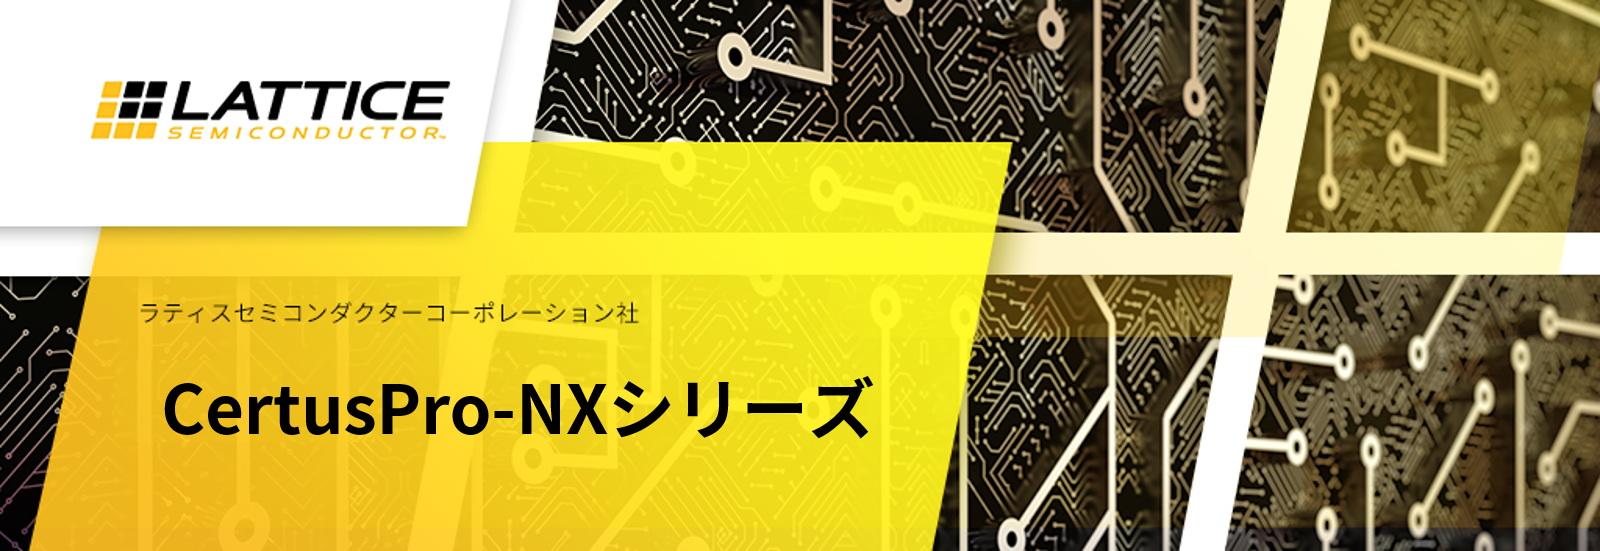 CertusPro-NXシリーズ